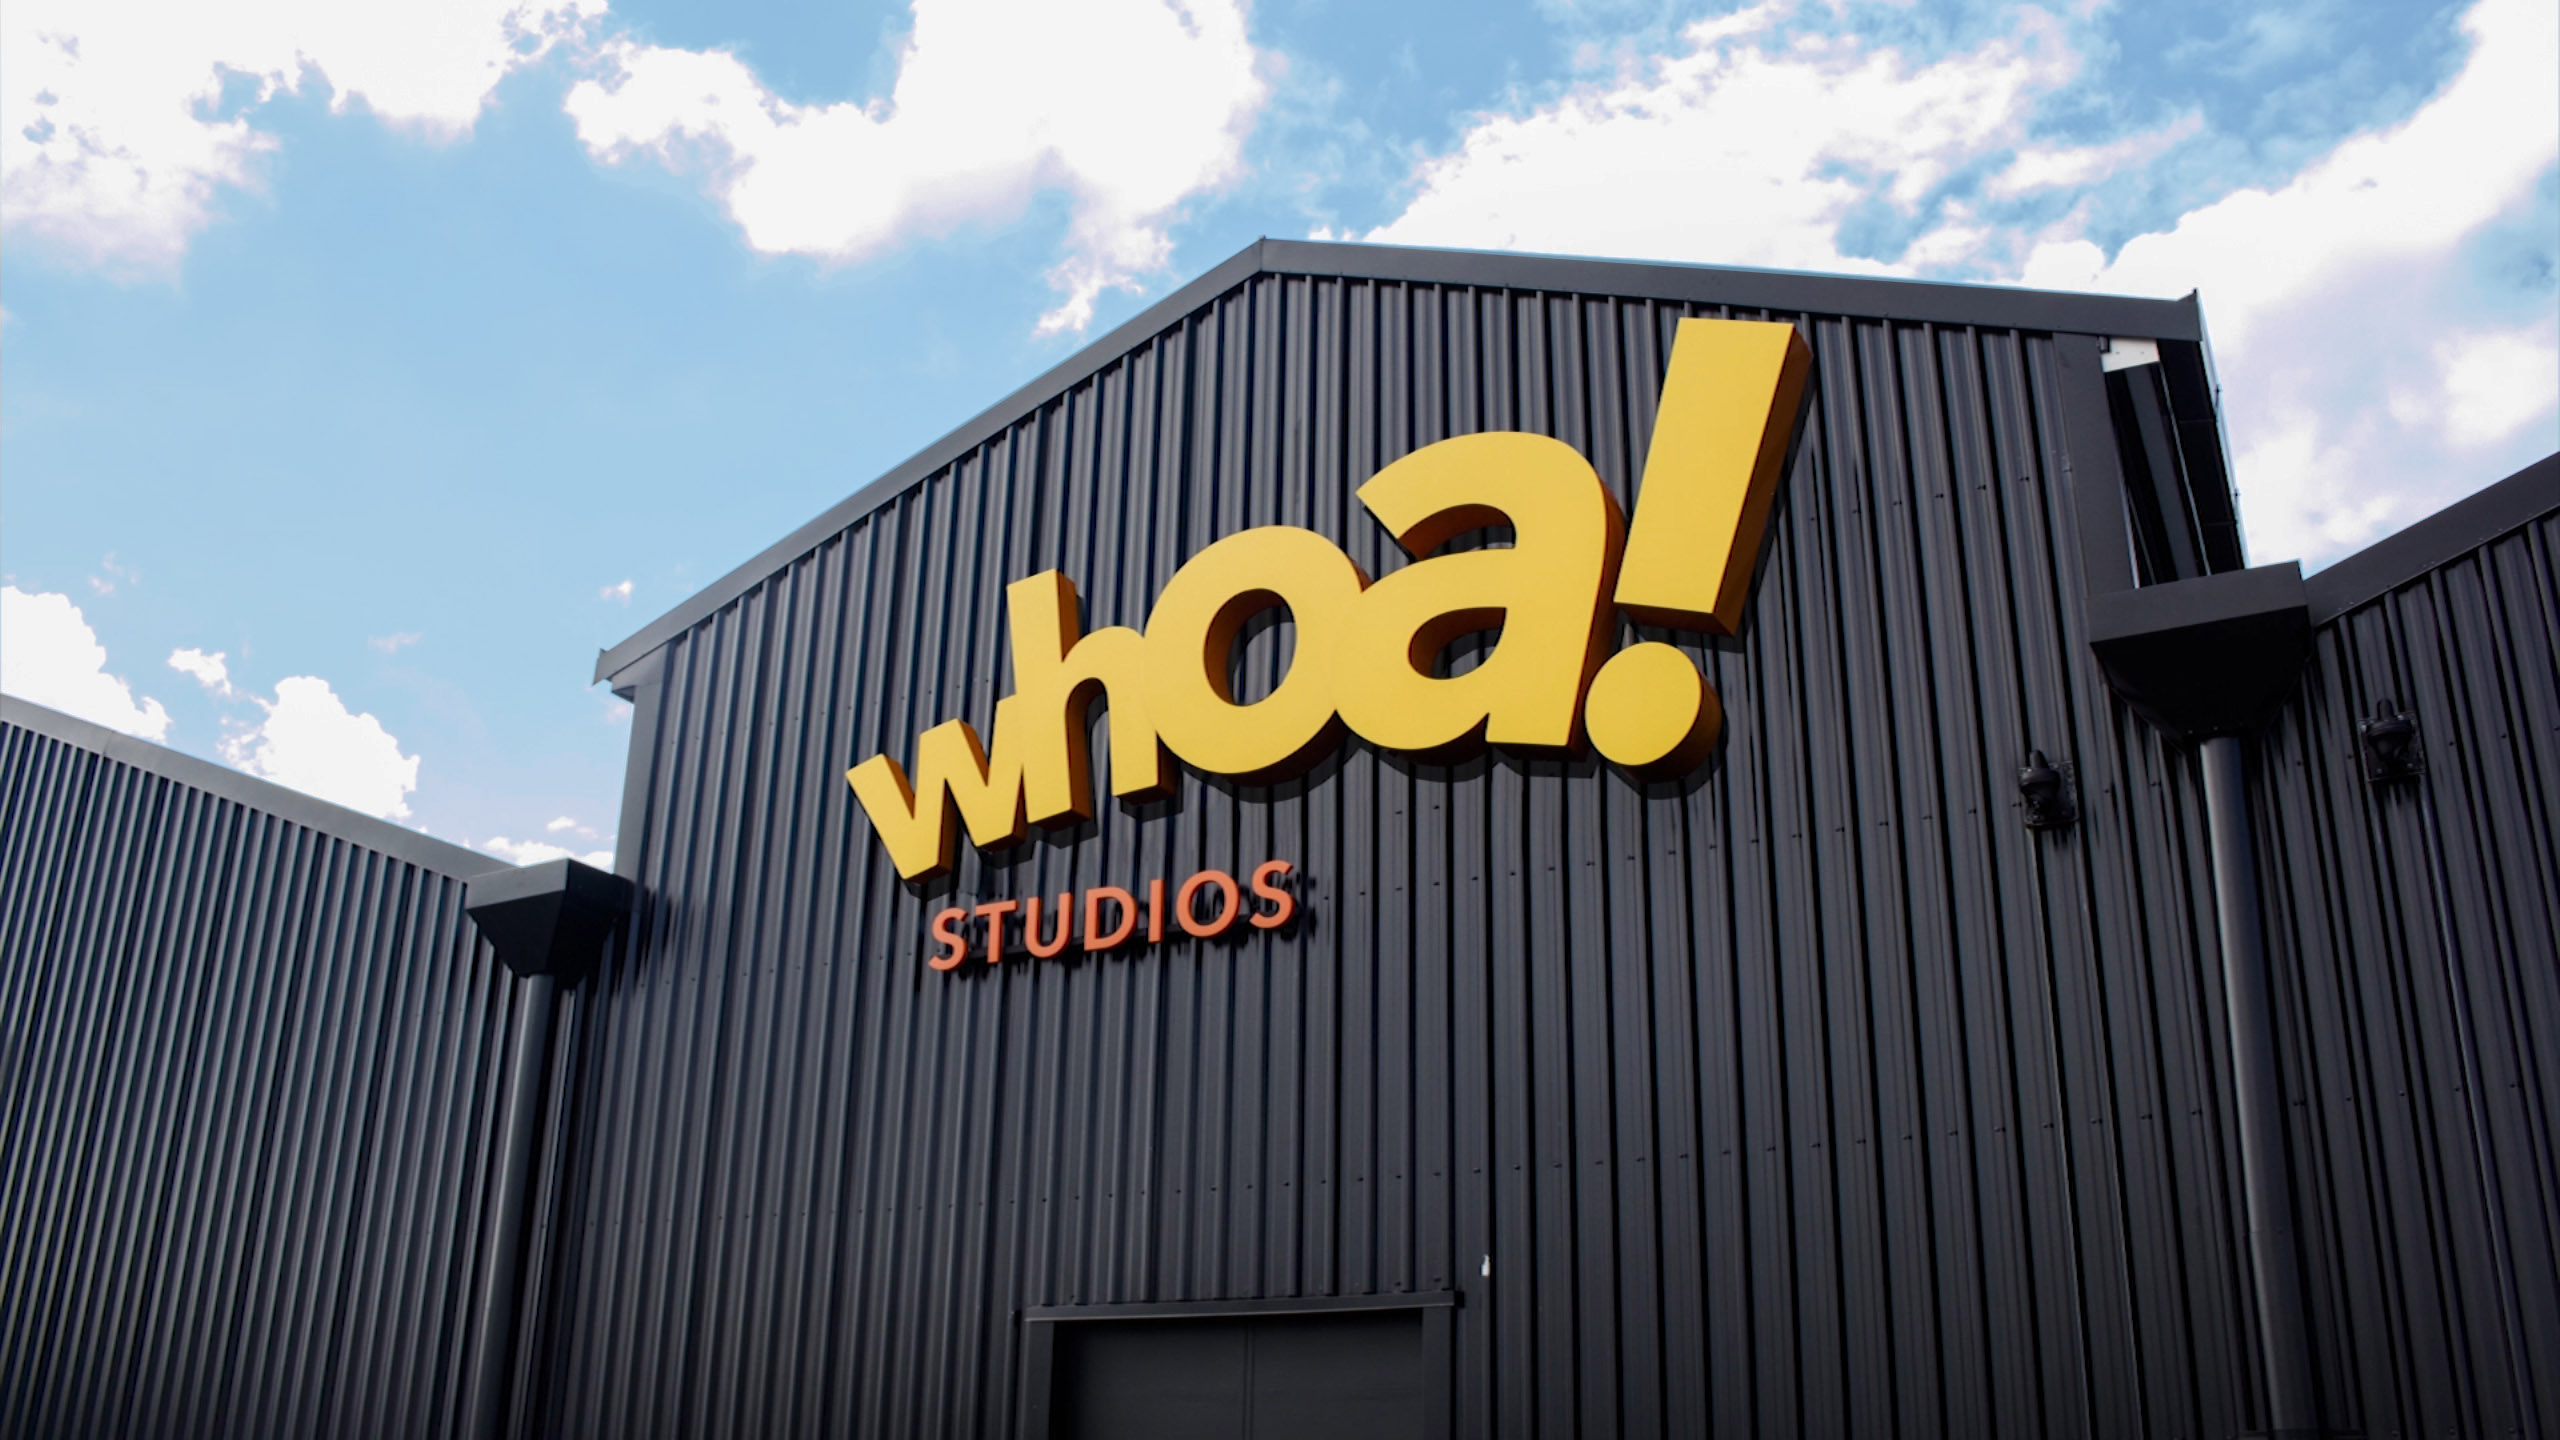 HARMAN 专业音视系统为 Whoa! Studios 提供难忘的现场体验